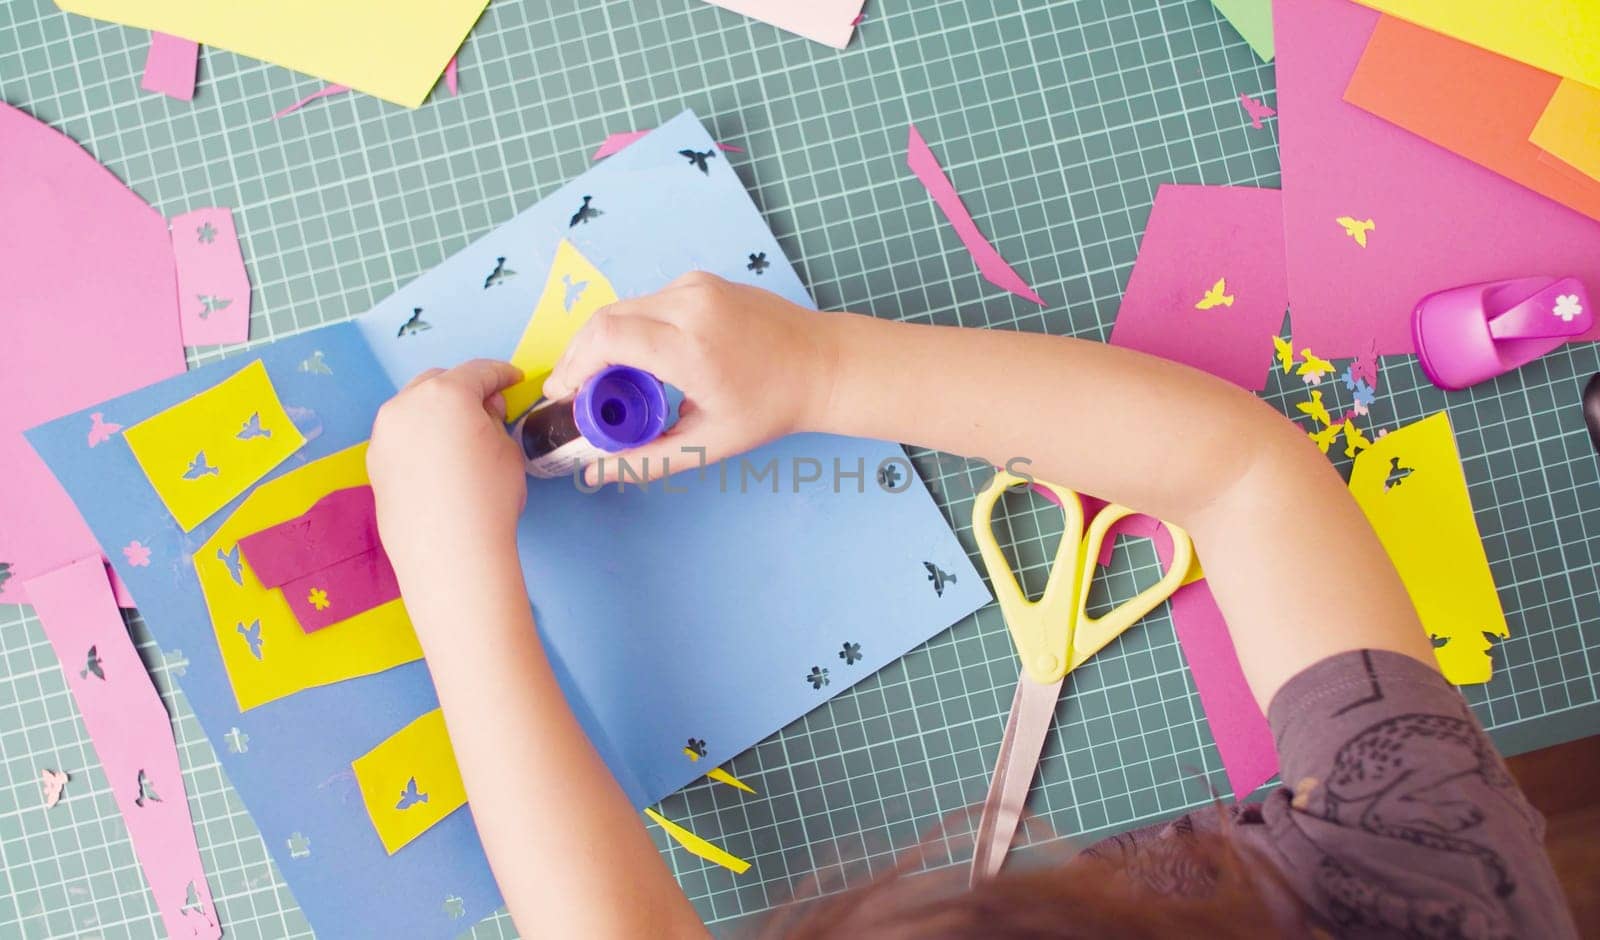 Top view. Scrapbooking. Hands of little girl gluing colored paper. Children's creativity, handicraft